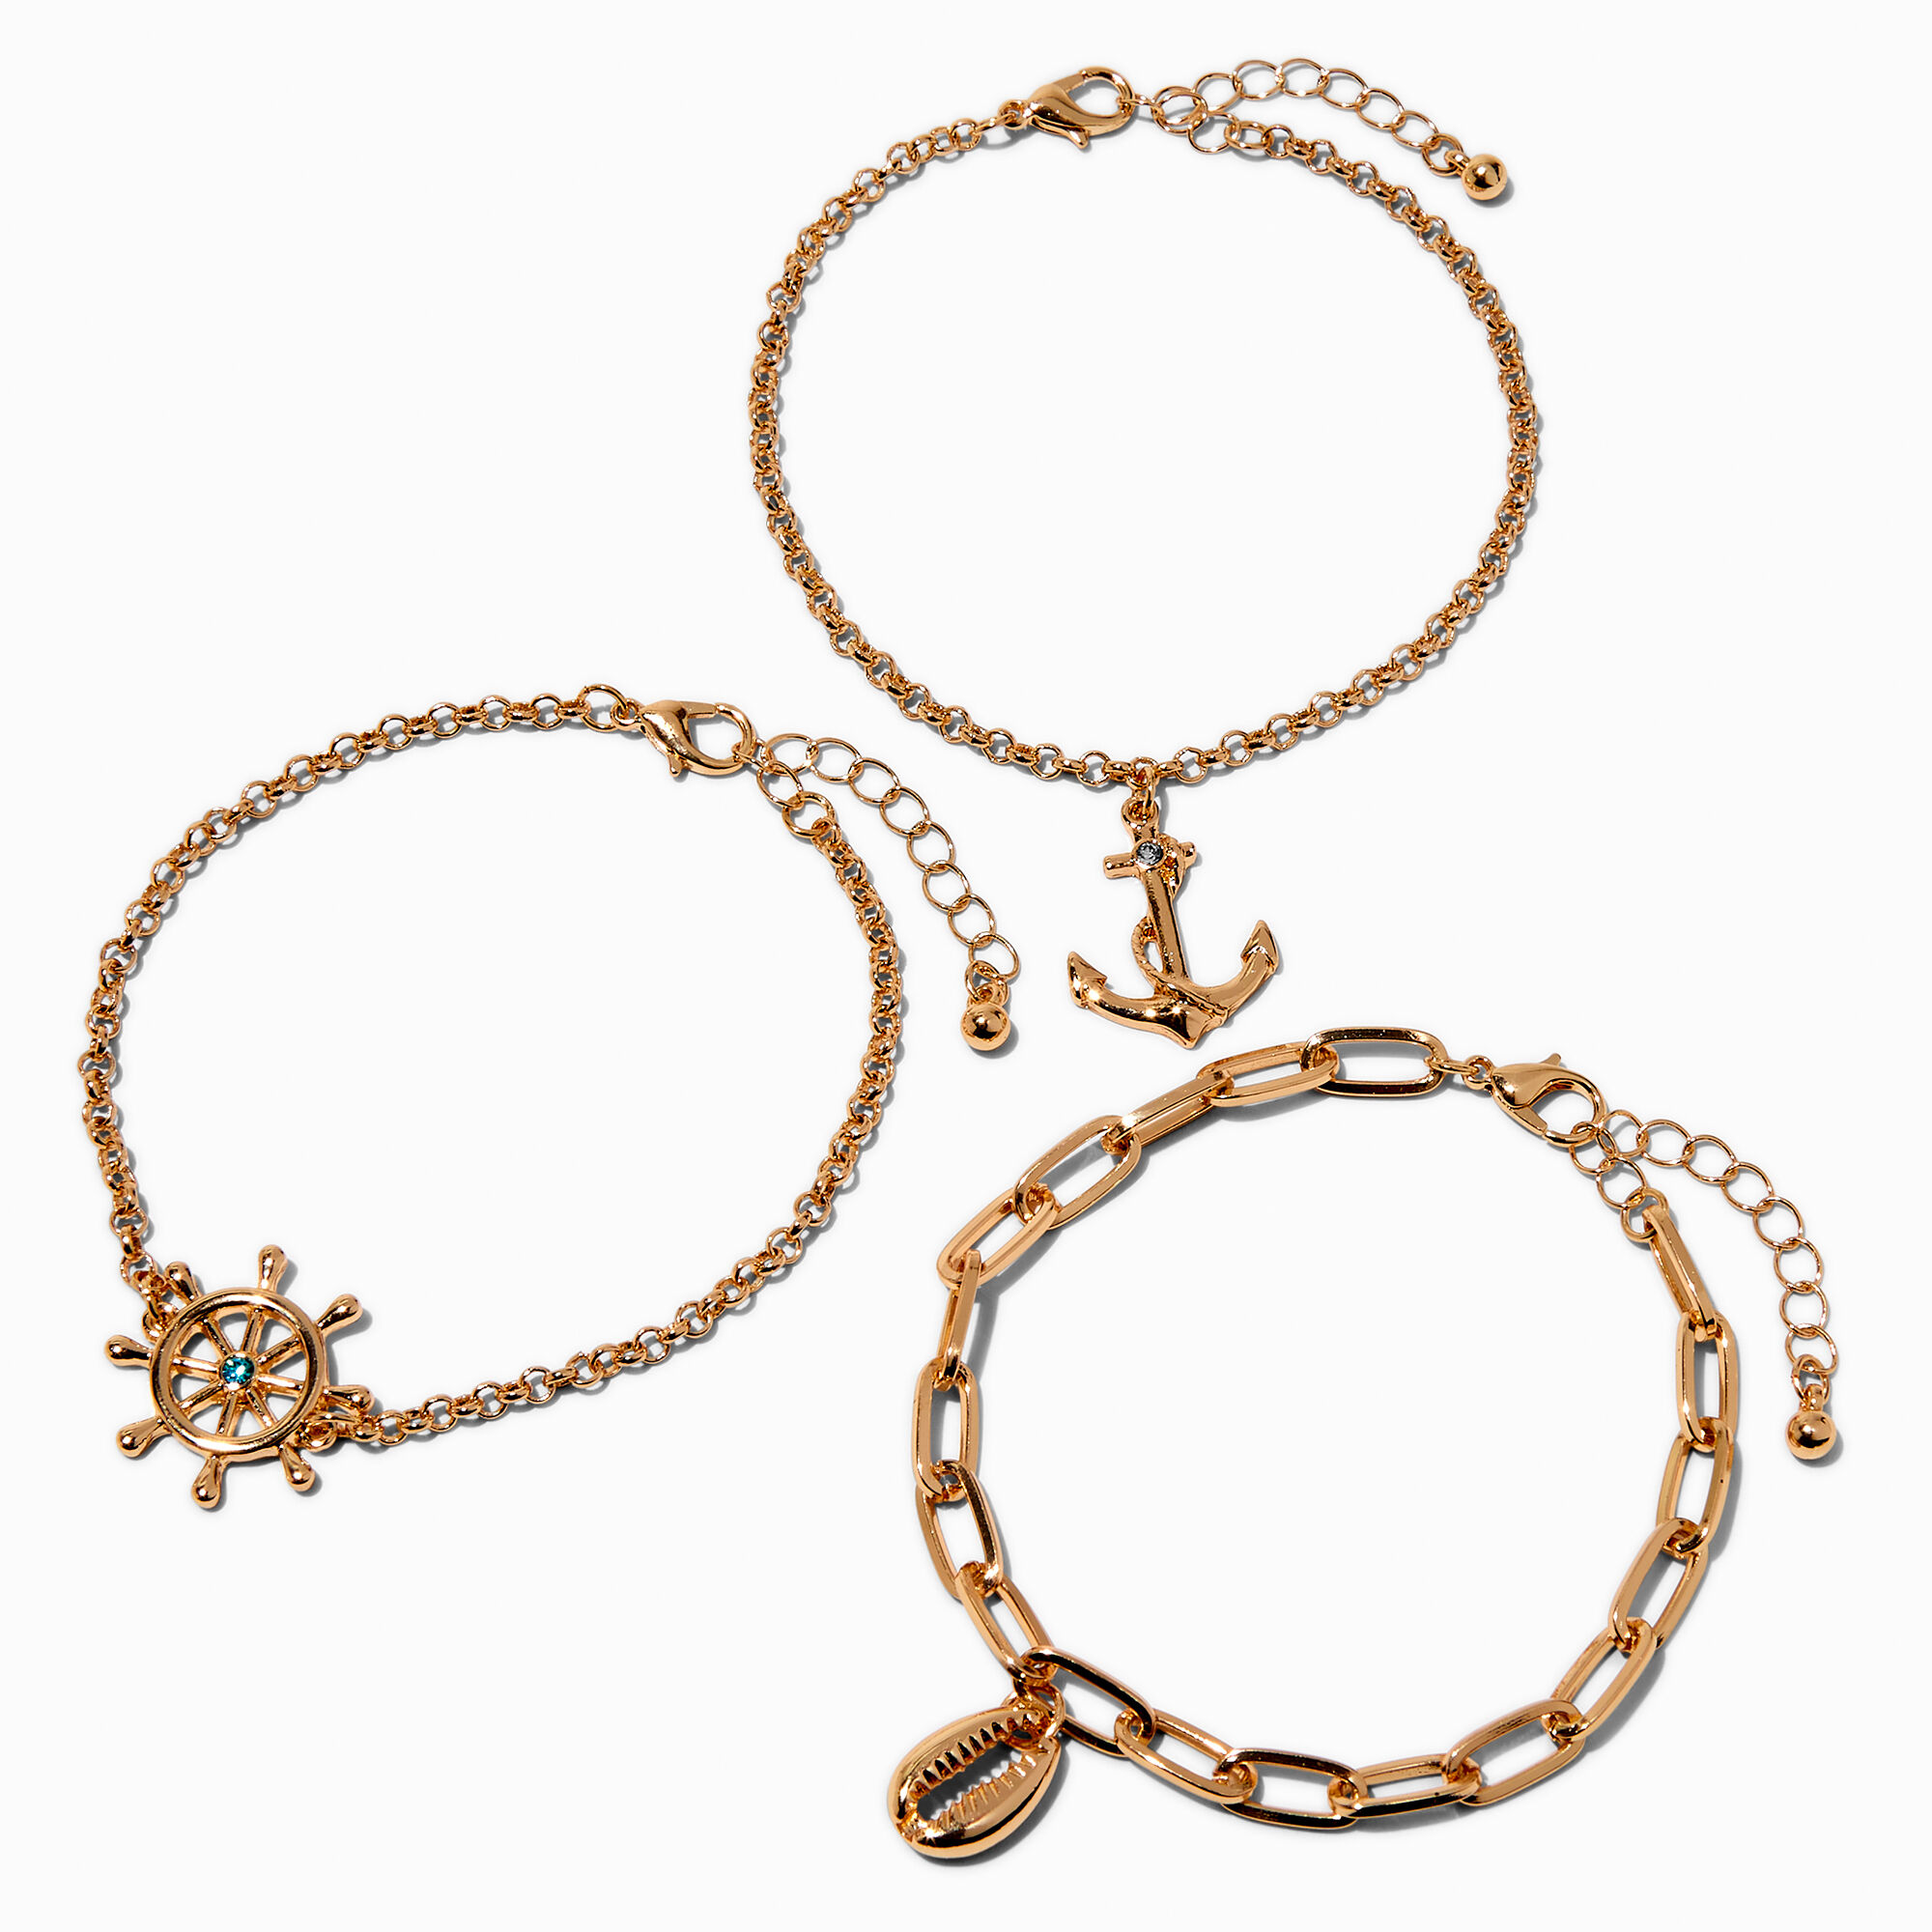 View Claires Tone Nautical Chain Bracelet Set 3 Pack Gold information